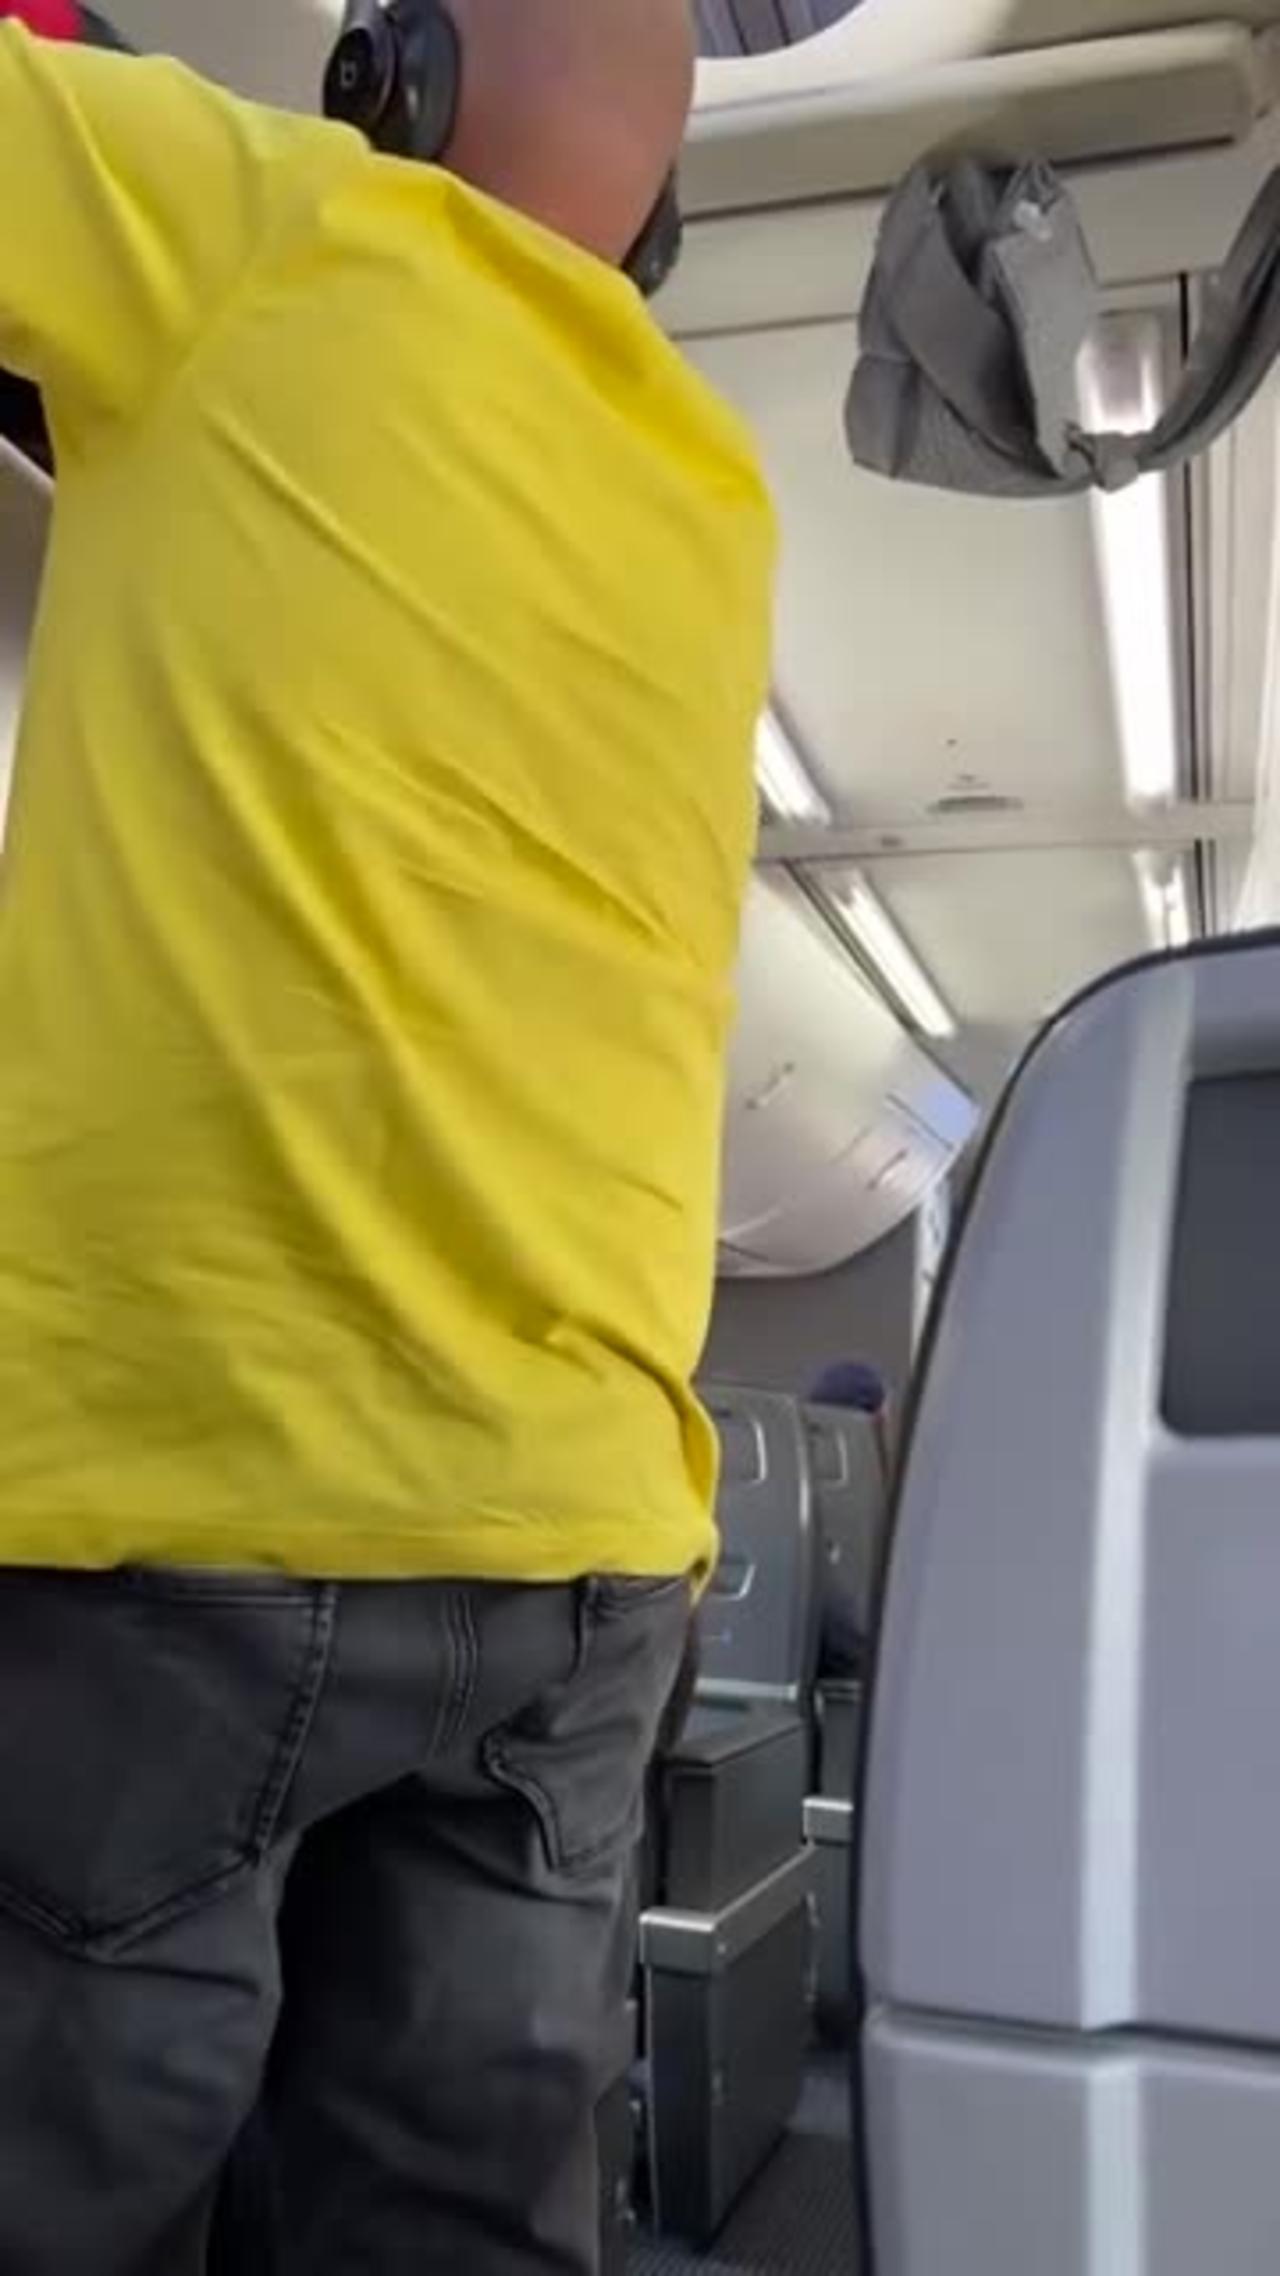 Furious Passenger Gets Kicked Off Flight for Arguing Over Overhead Bin